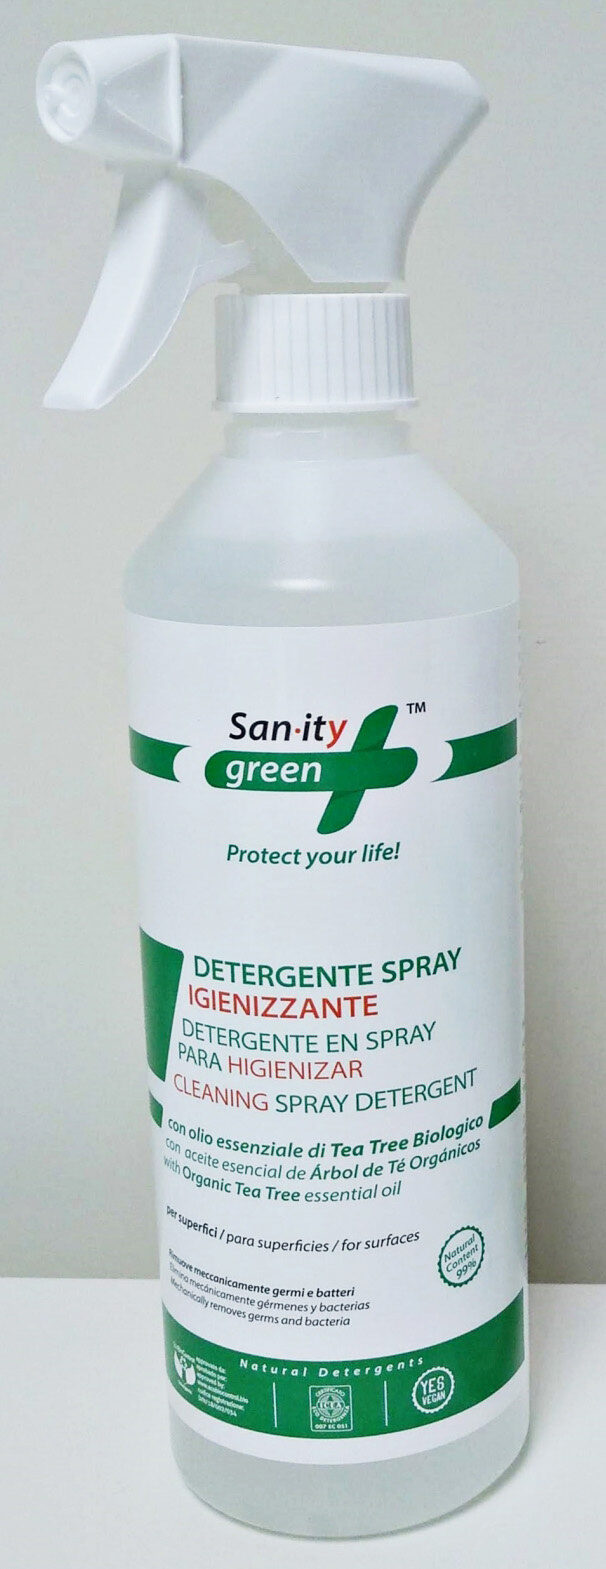 Detergente spray igienizzante per superfici - Sanity green - Product - en